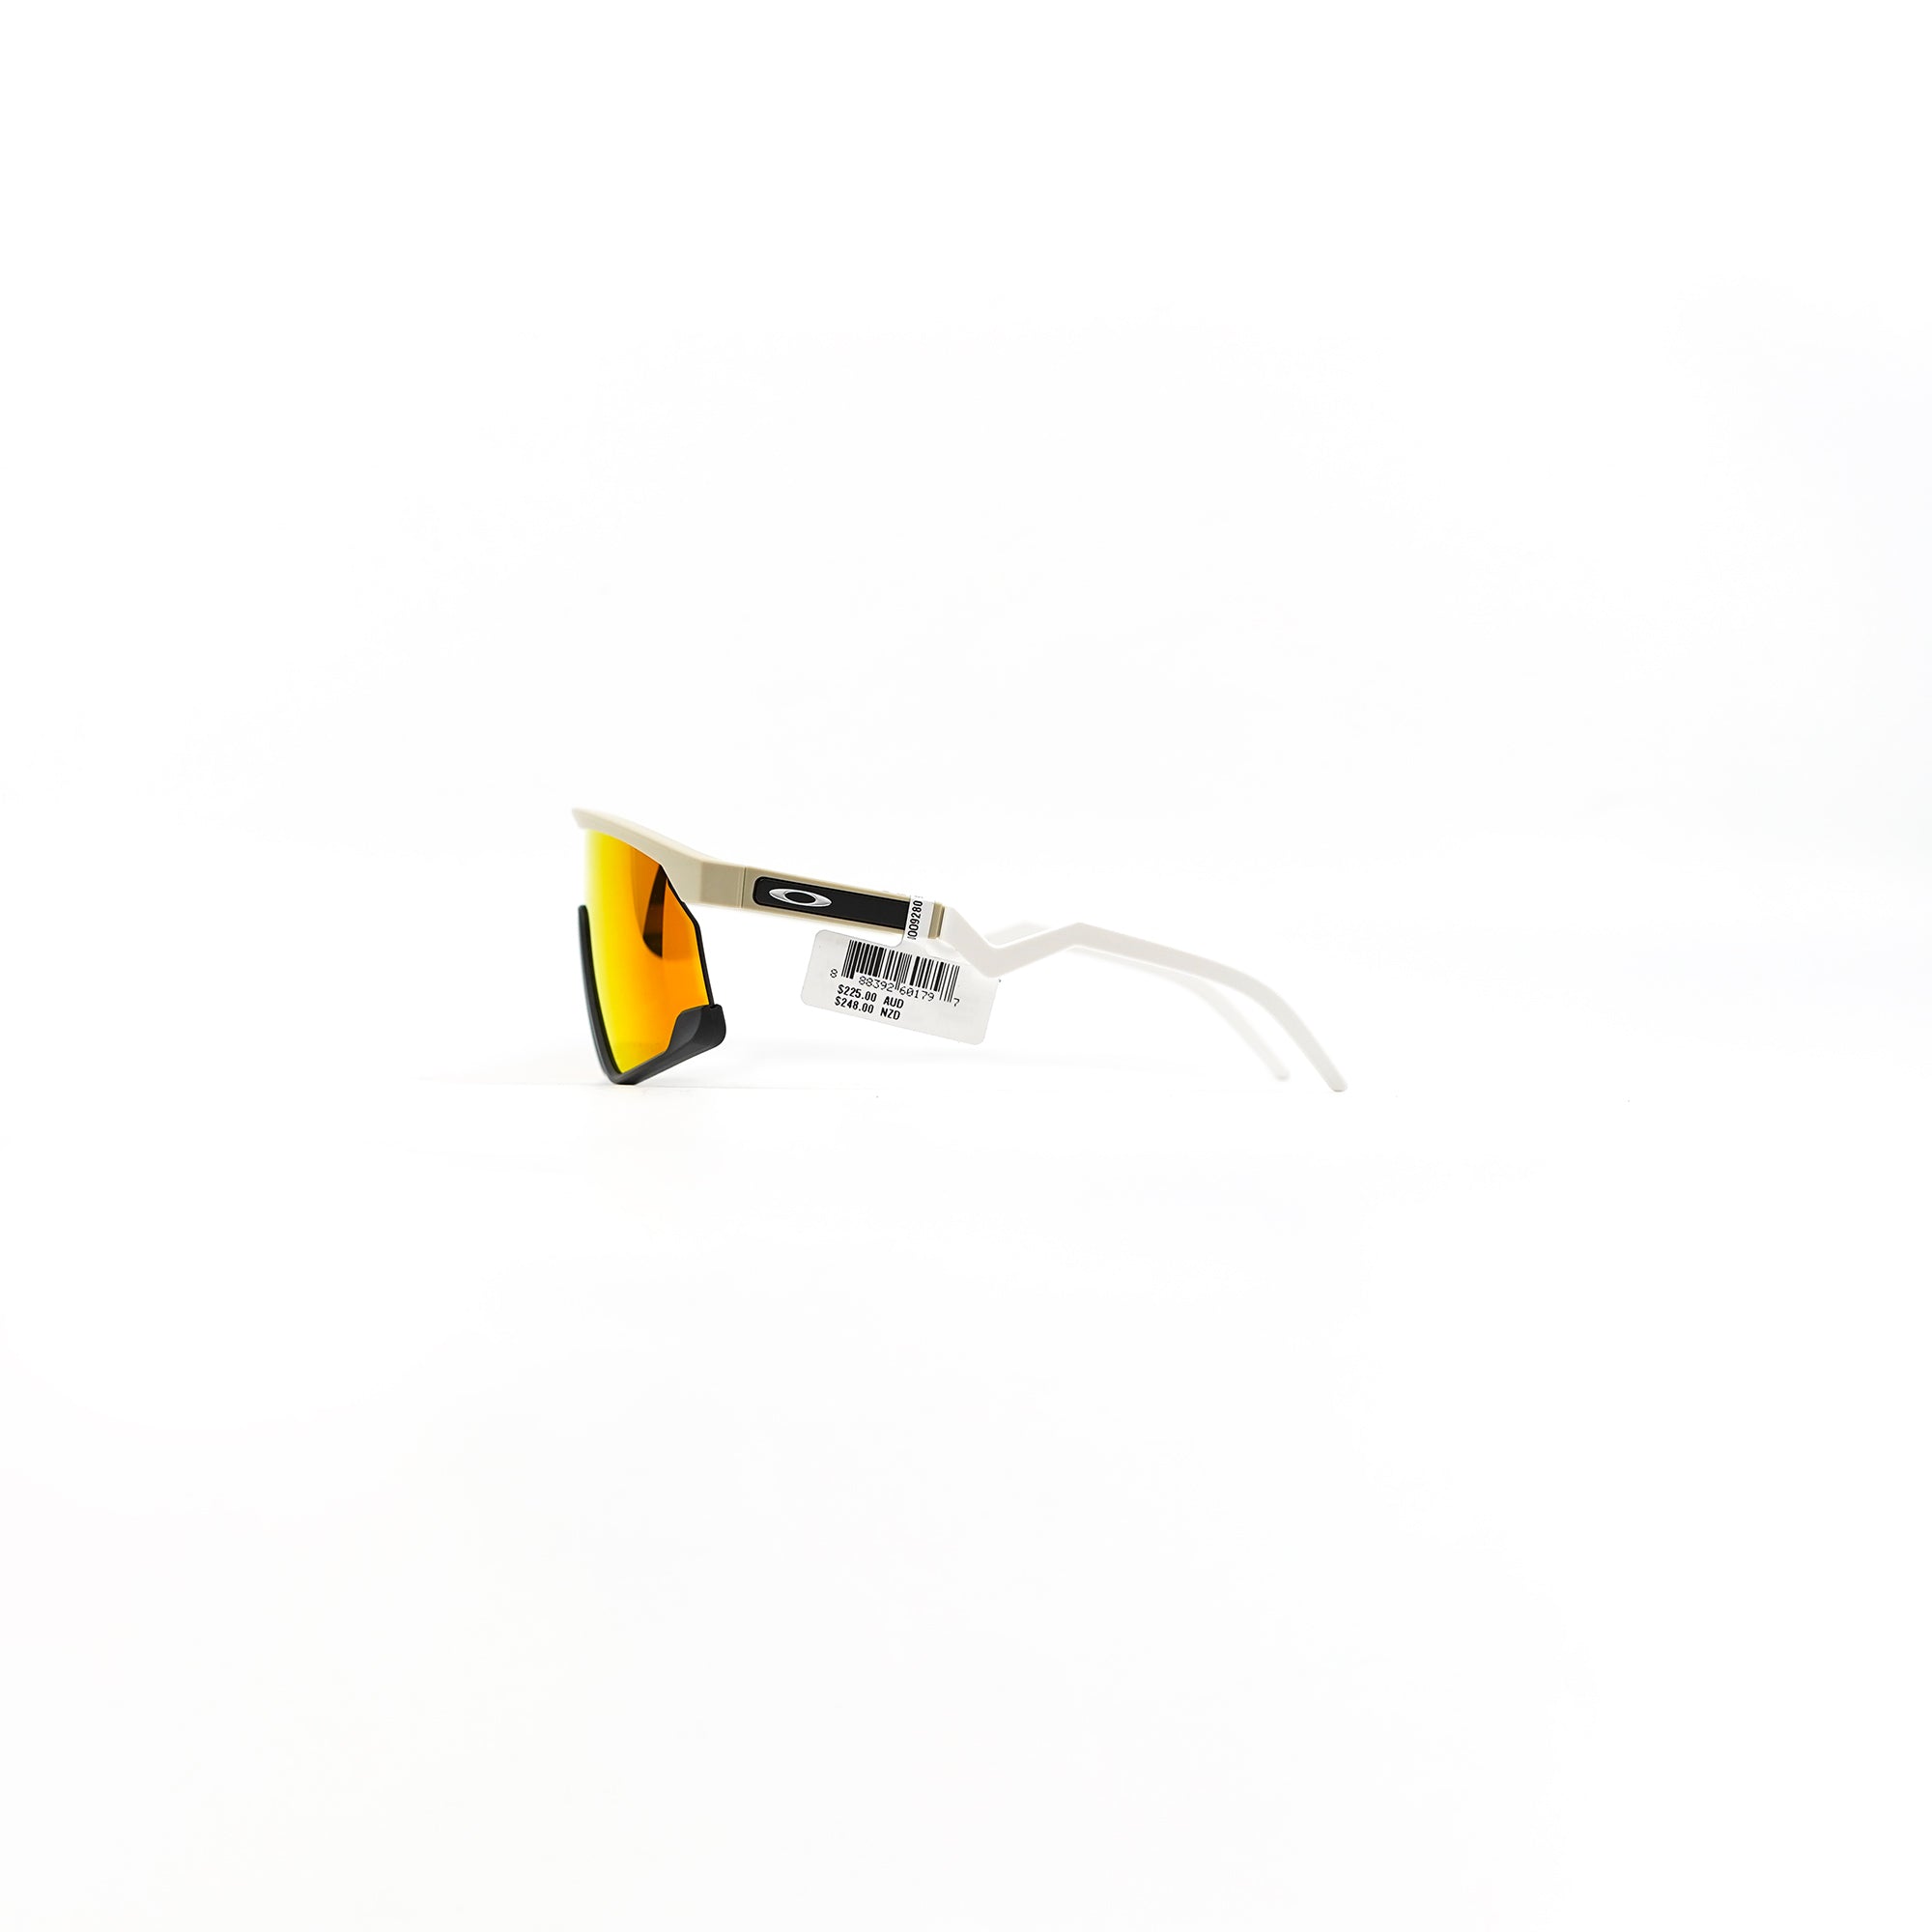 Oakley OO9280 BXTR Prizm Ruby & Matte Desert Tan Sunglasses